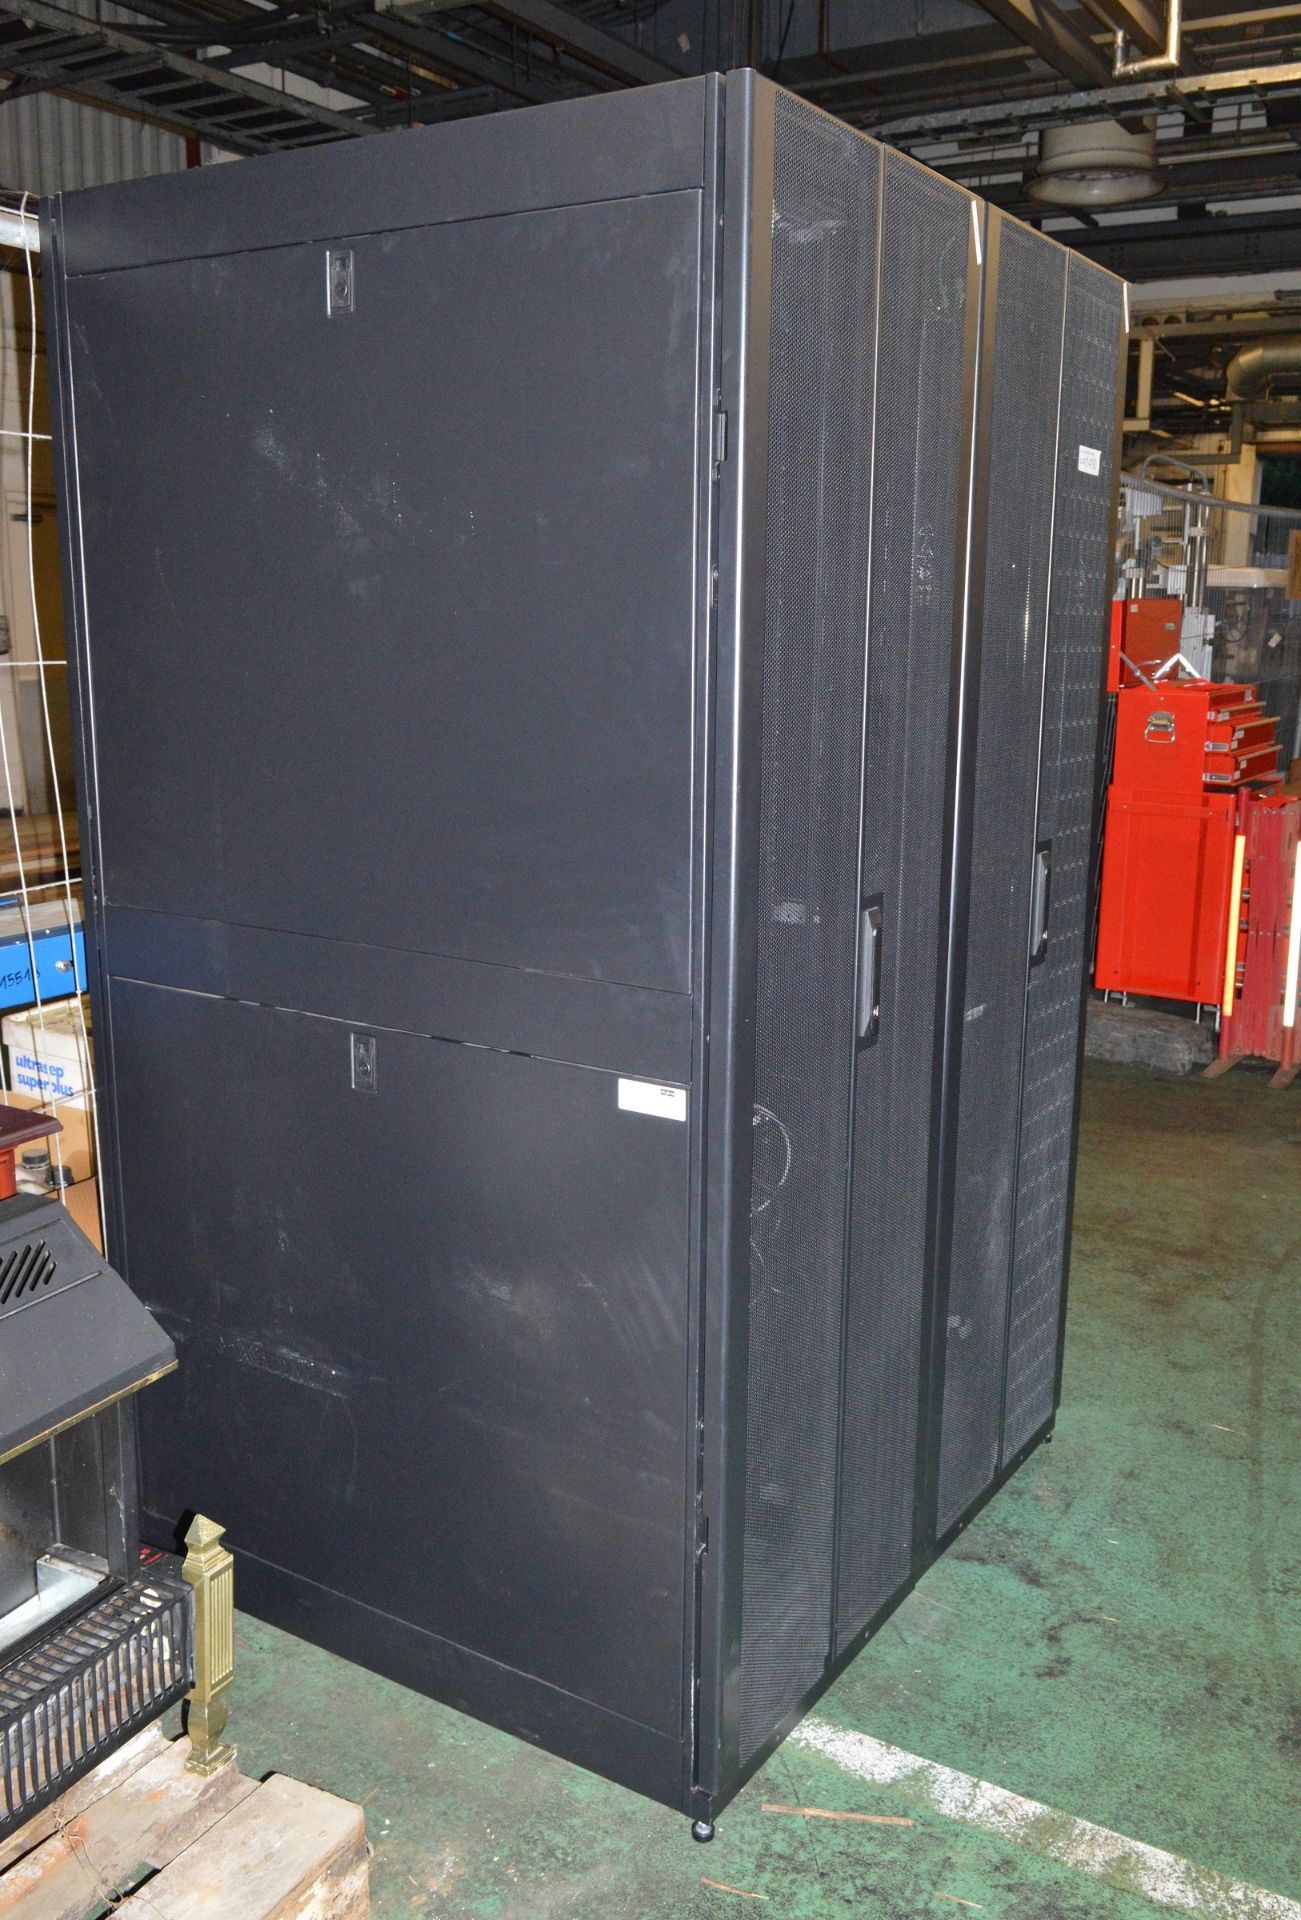 2x Server / Electronic Racks APC Schneider - 1200mm wide x 1070mm deep x 2000mm high - Image 4 of 4